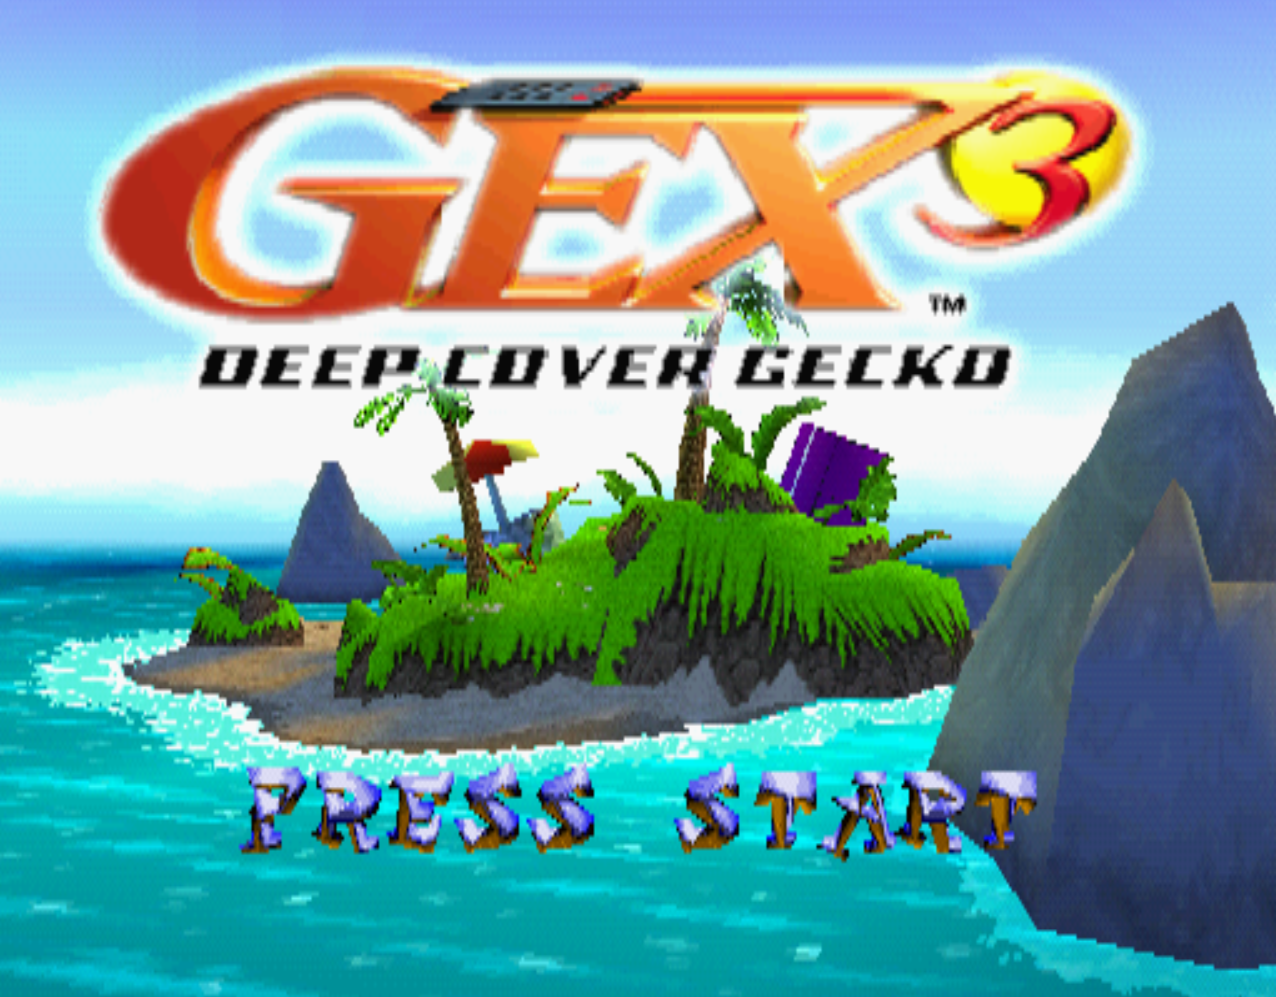 Gex 3 Deep Cover Gecko Title Screen